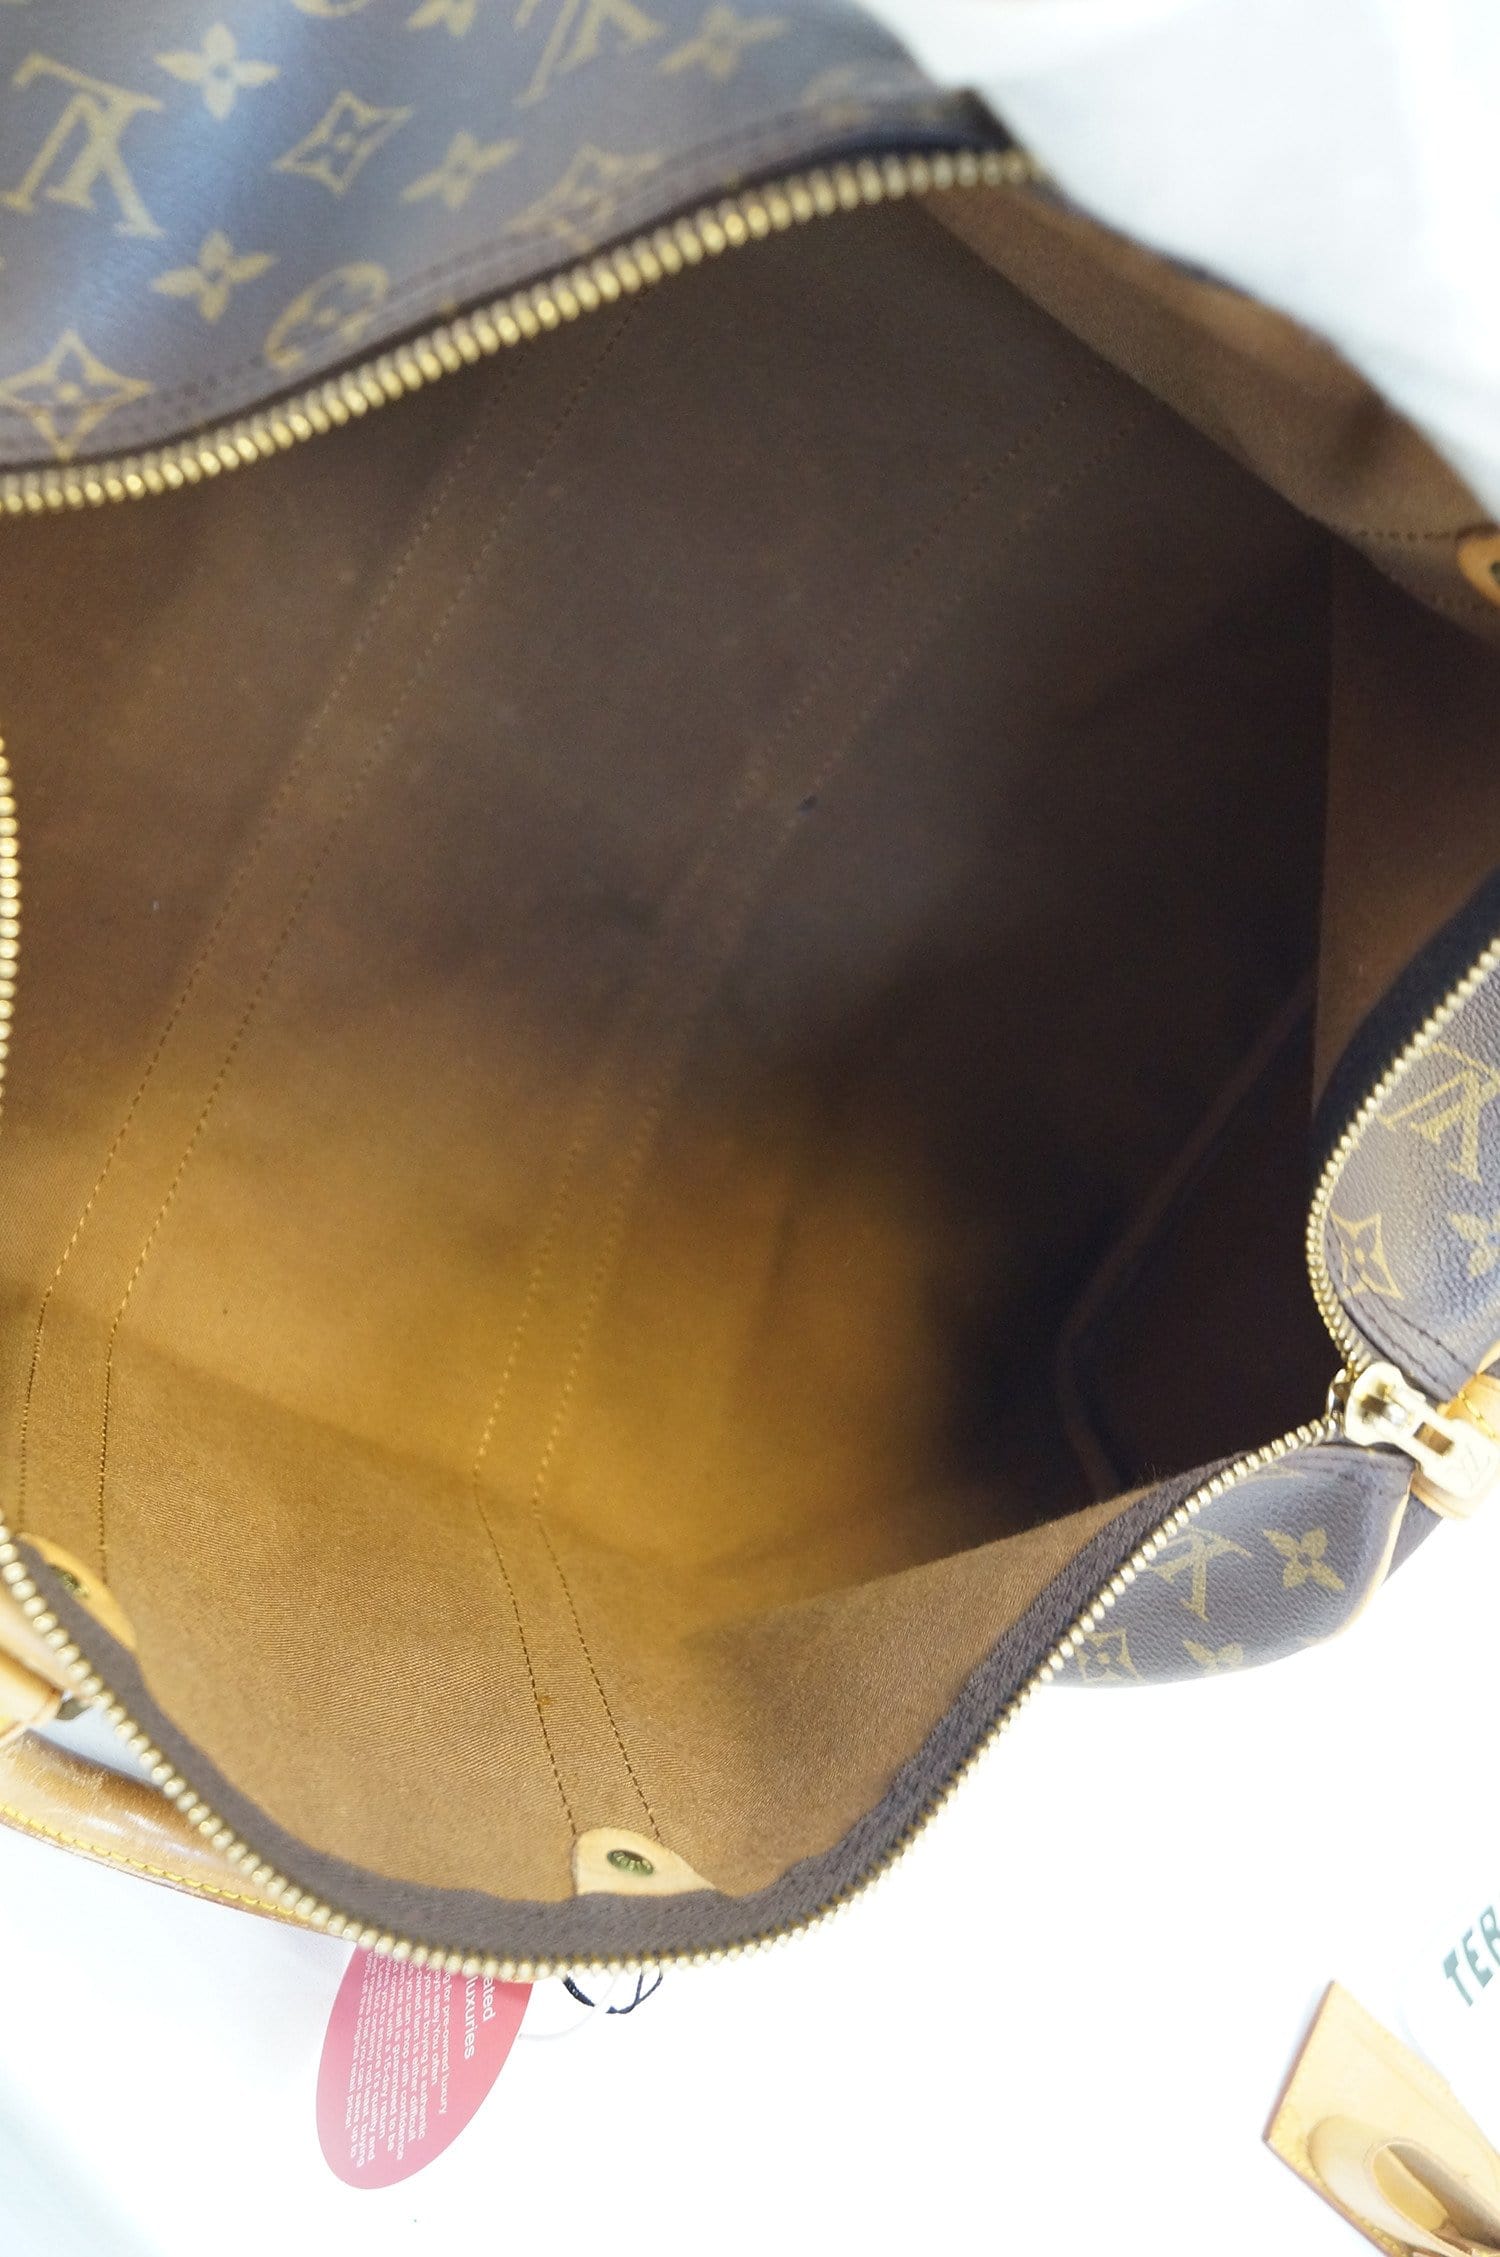 Louis Vuitton Vintage Keepall 45 Luggage Bag, $1,770, farfetch.com